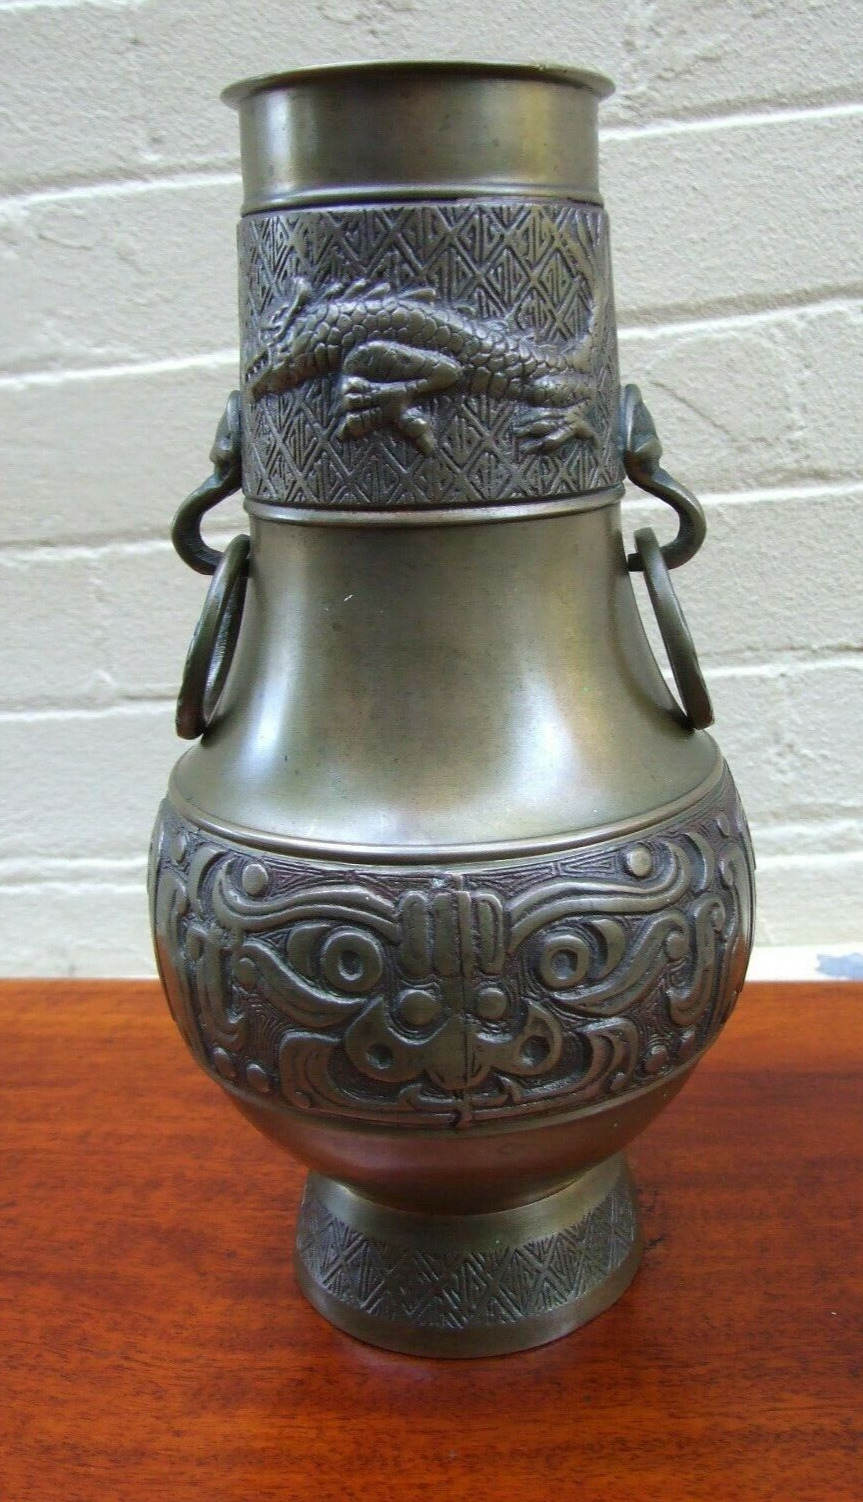 Antique Brass Vase Dragon Design Heavy Solid Side Rings Oriental Decor Rare Find